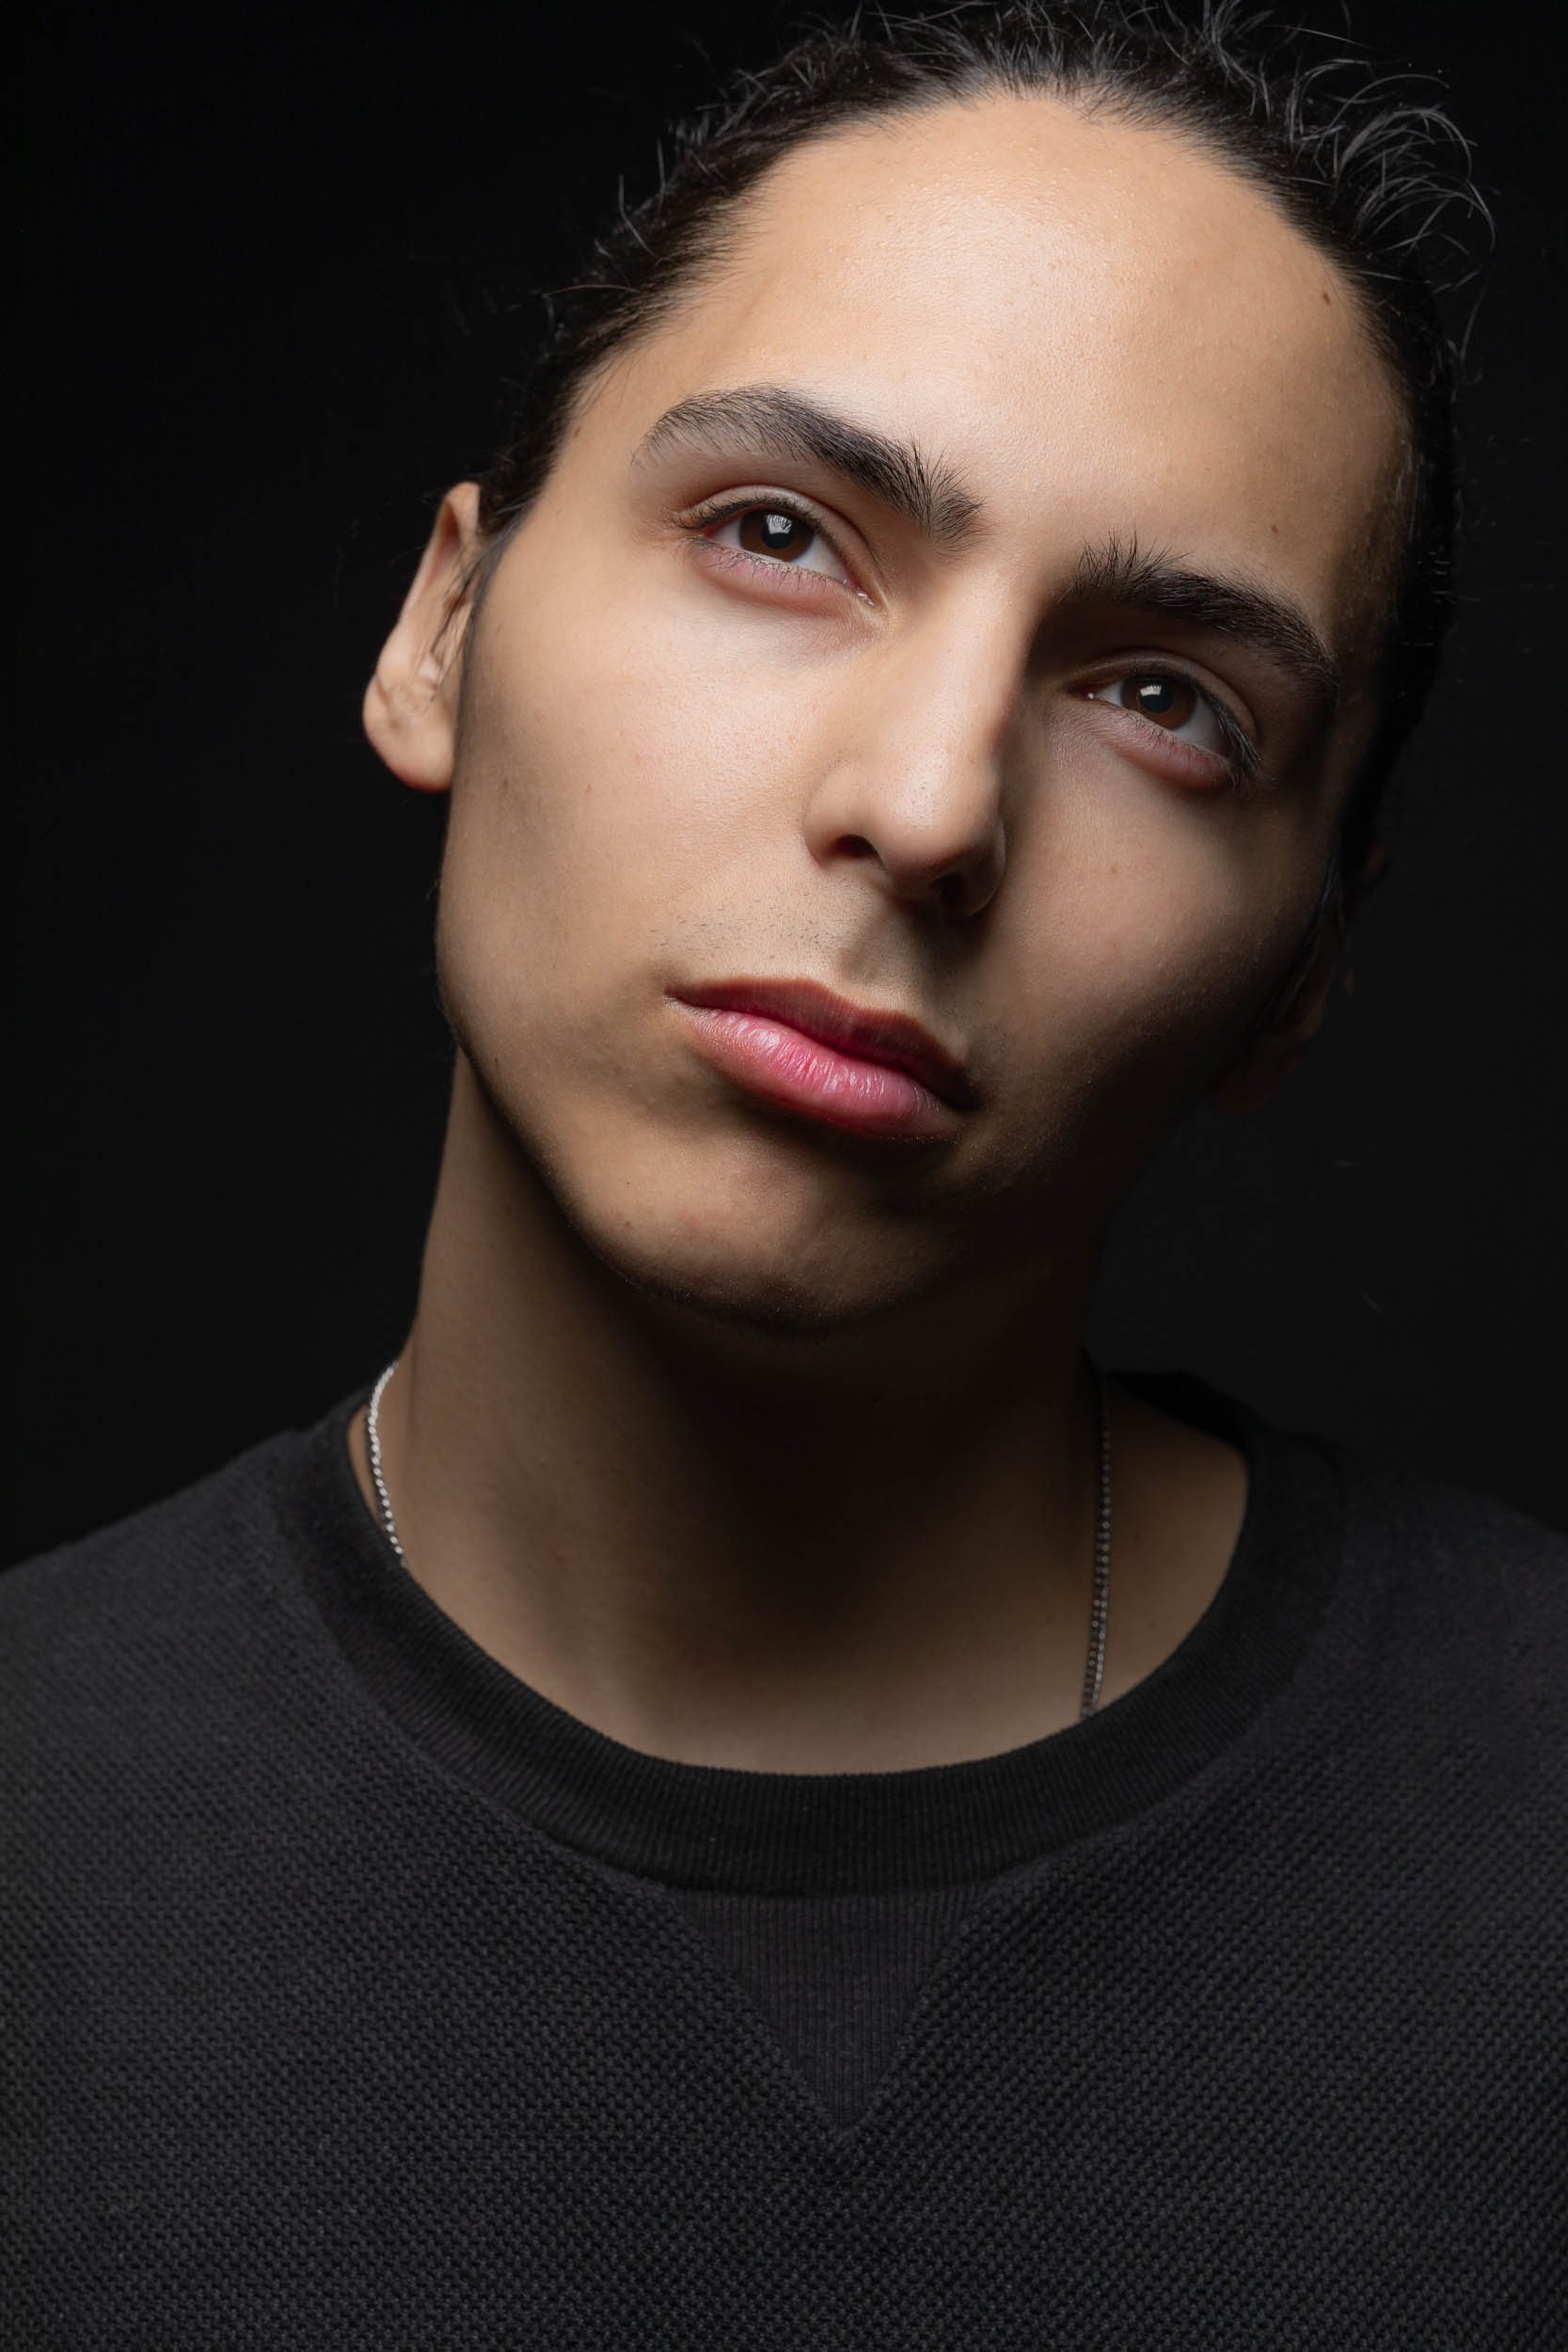 NYC Studio Portrait of Hispanic Male Actor - Sharon Schuur Photography